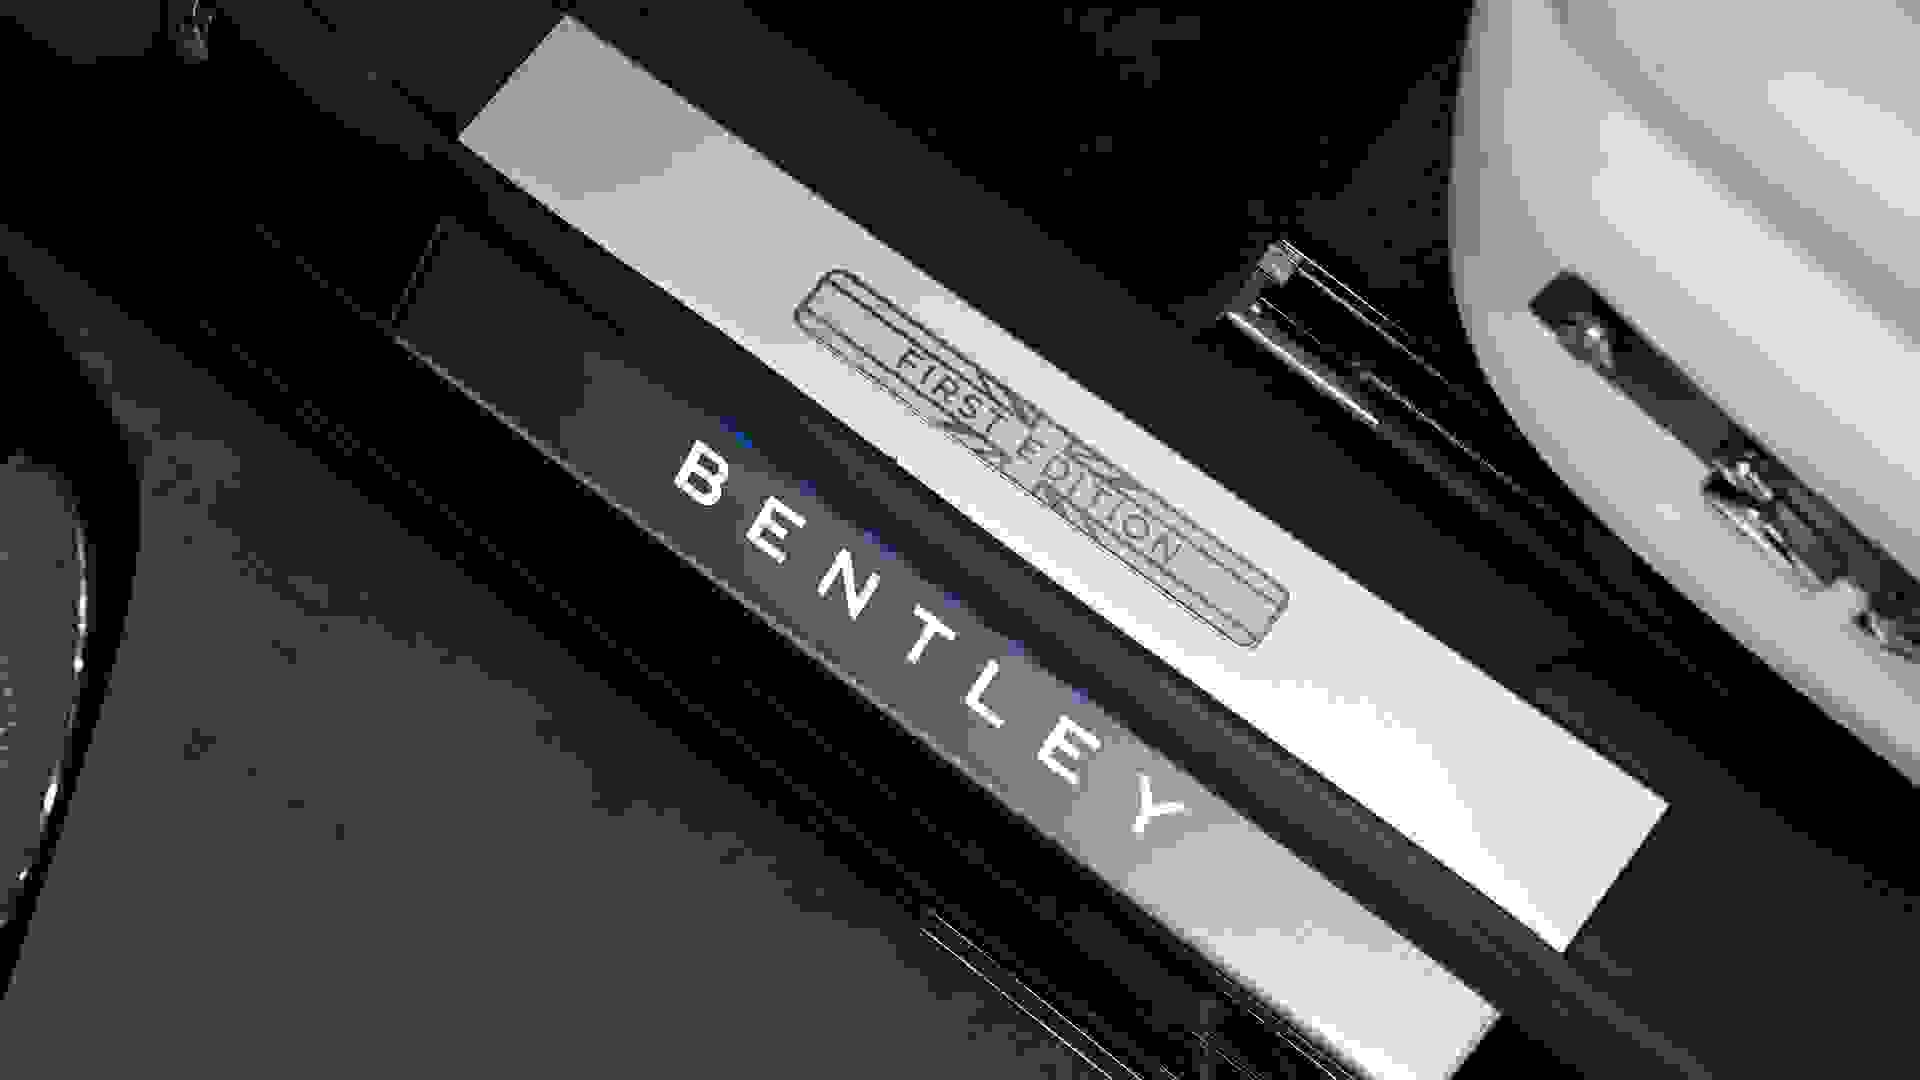 Bentley Continental Flying Spur Photo acc858b2-5405-47a3-8370-2202ba93f59e.jpg